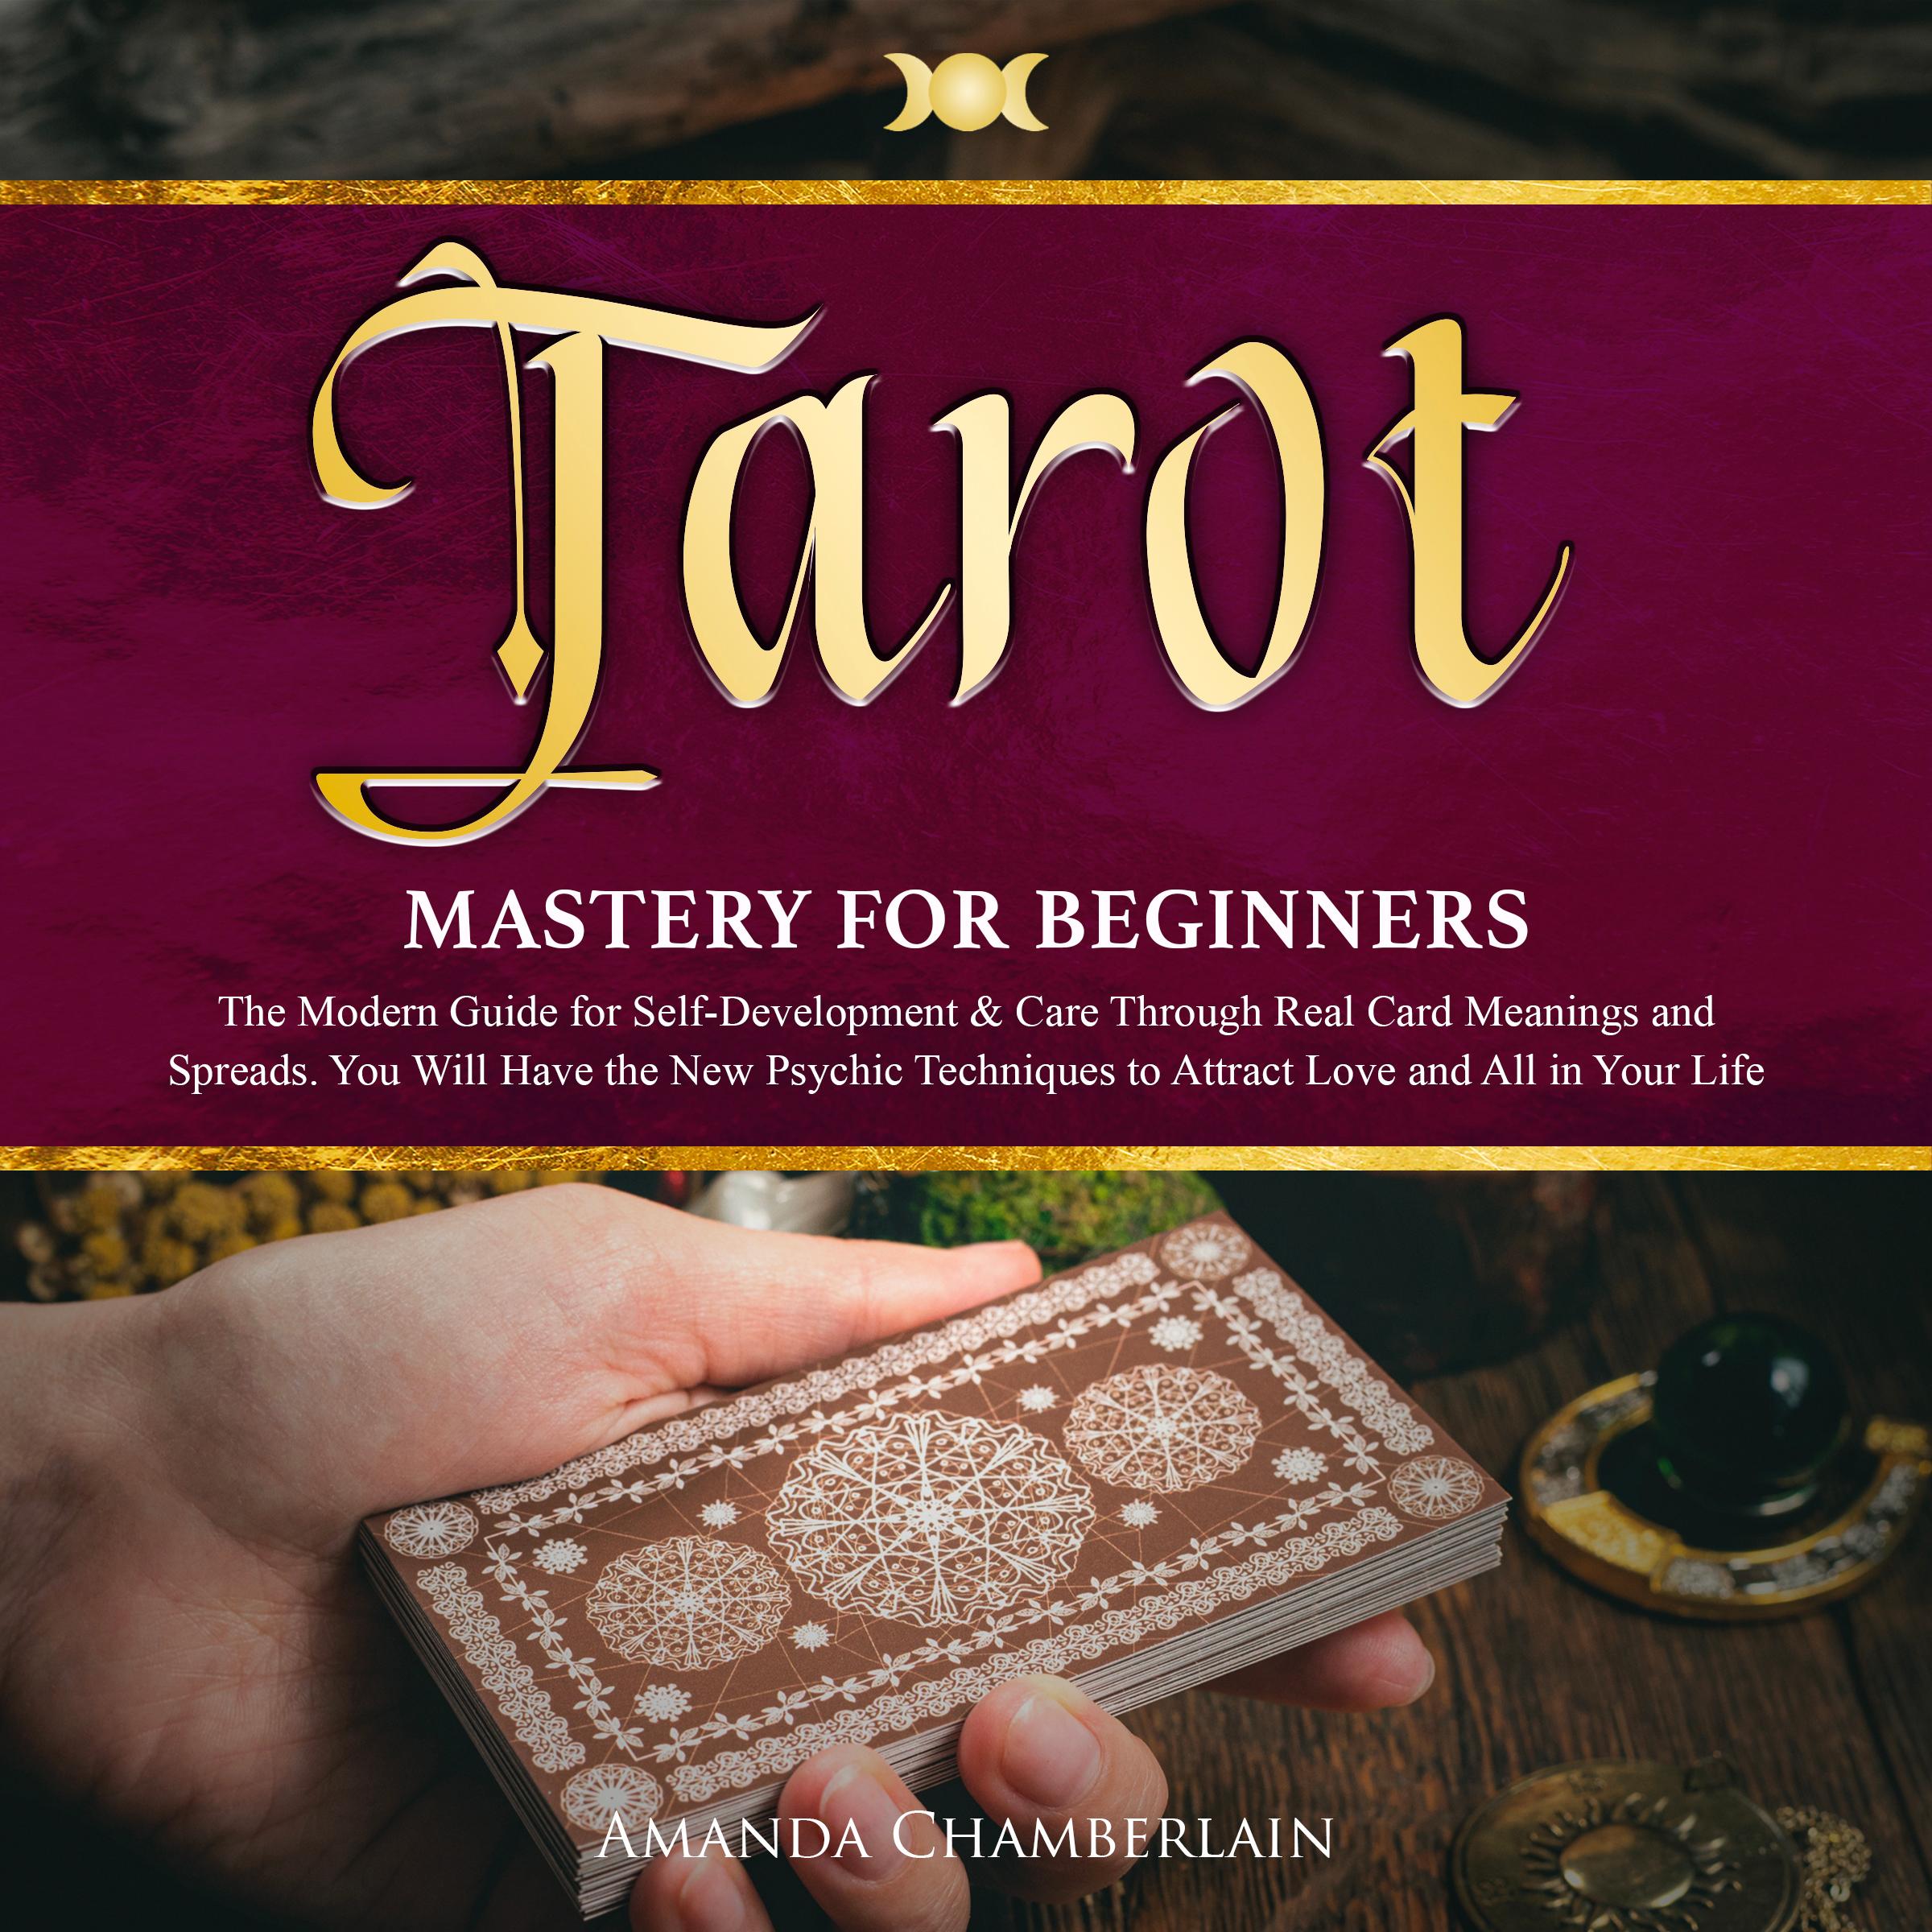 Tarot Mastery for Beginners